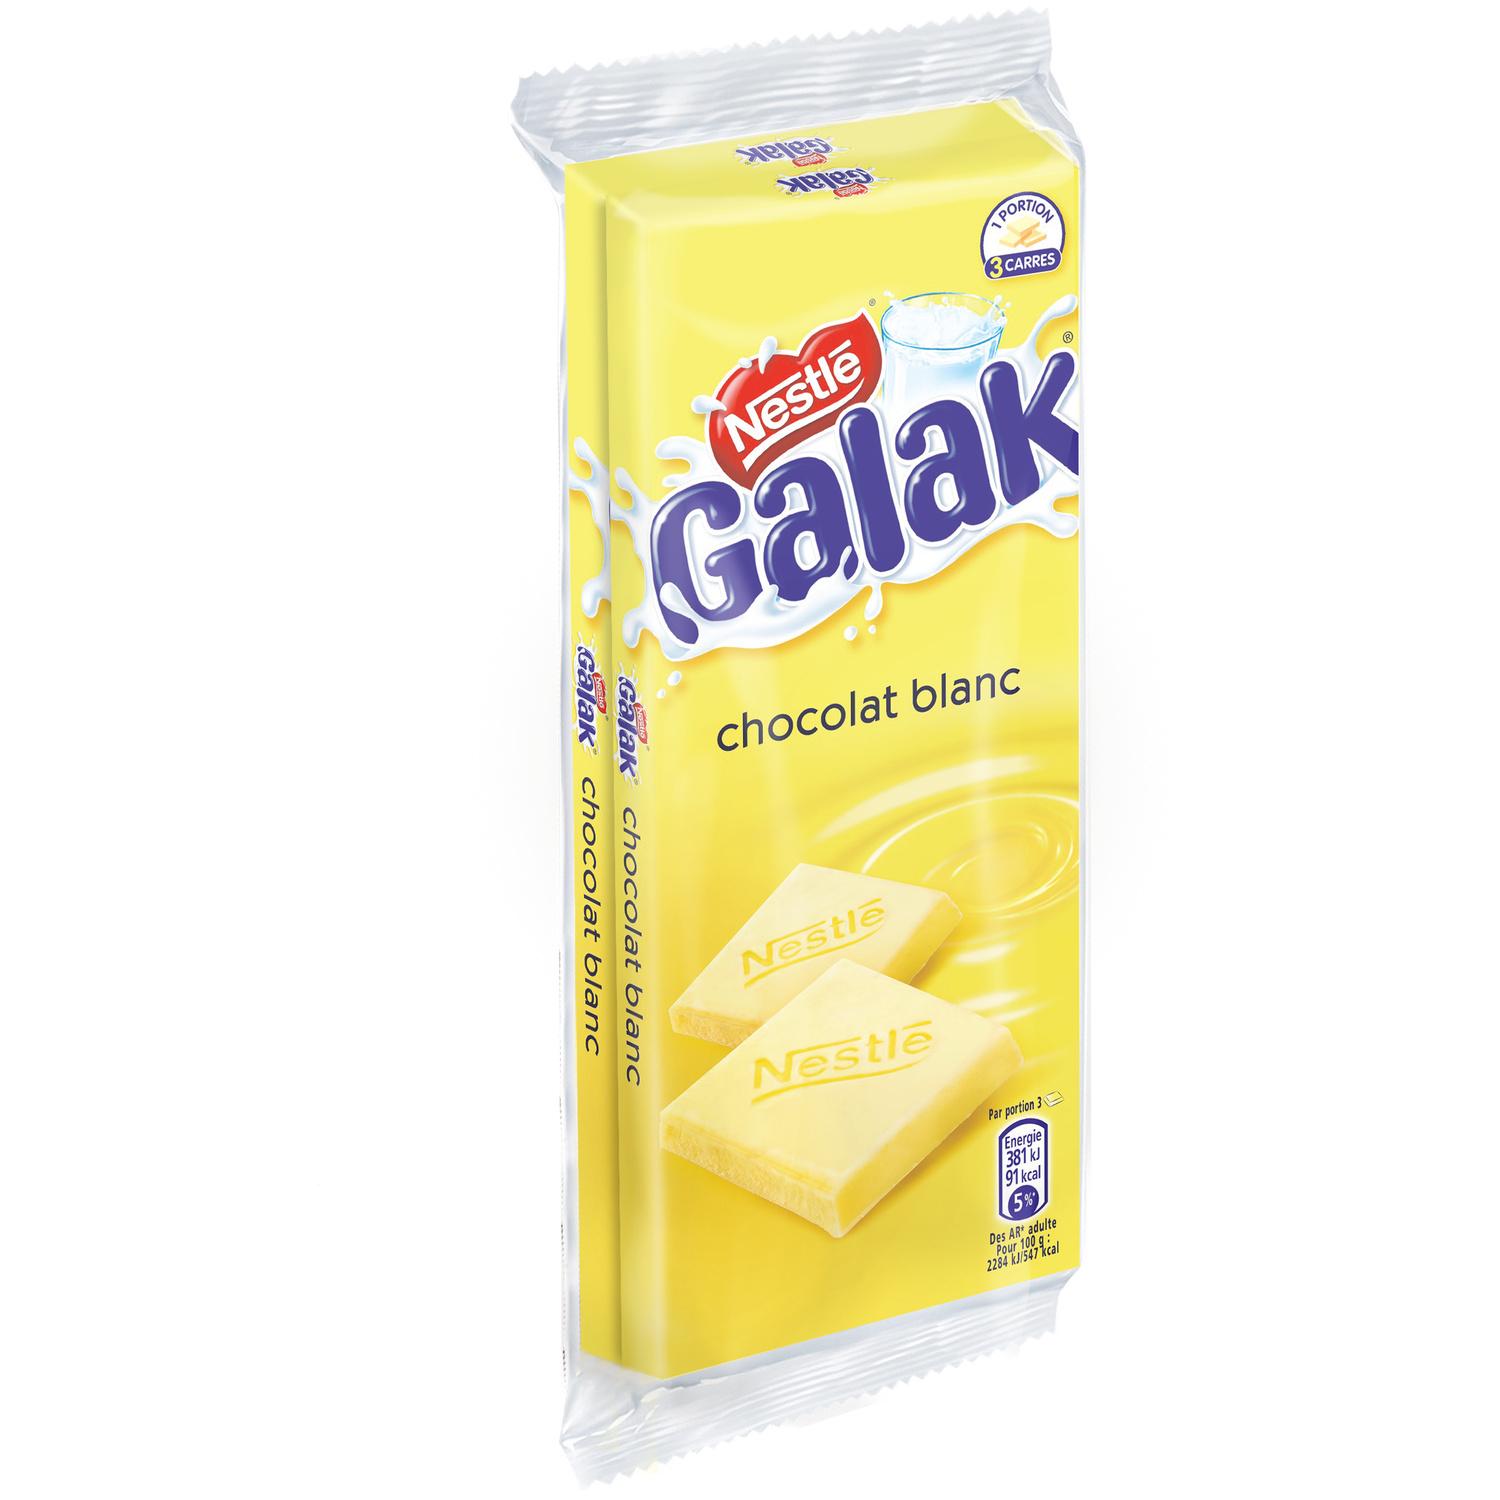 White Chocolate Nestle Galak, Buy Online